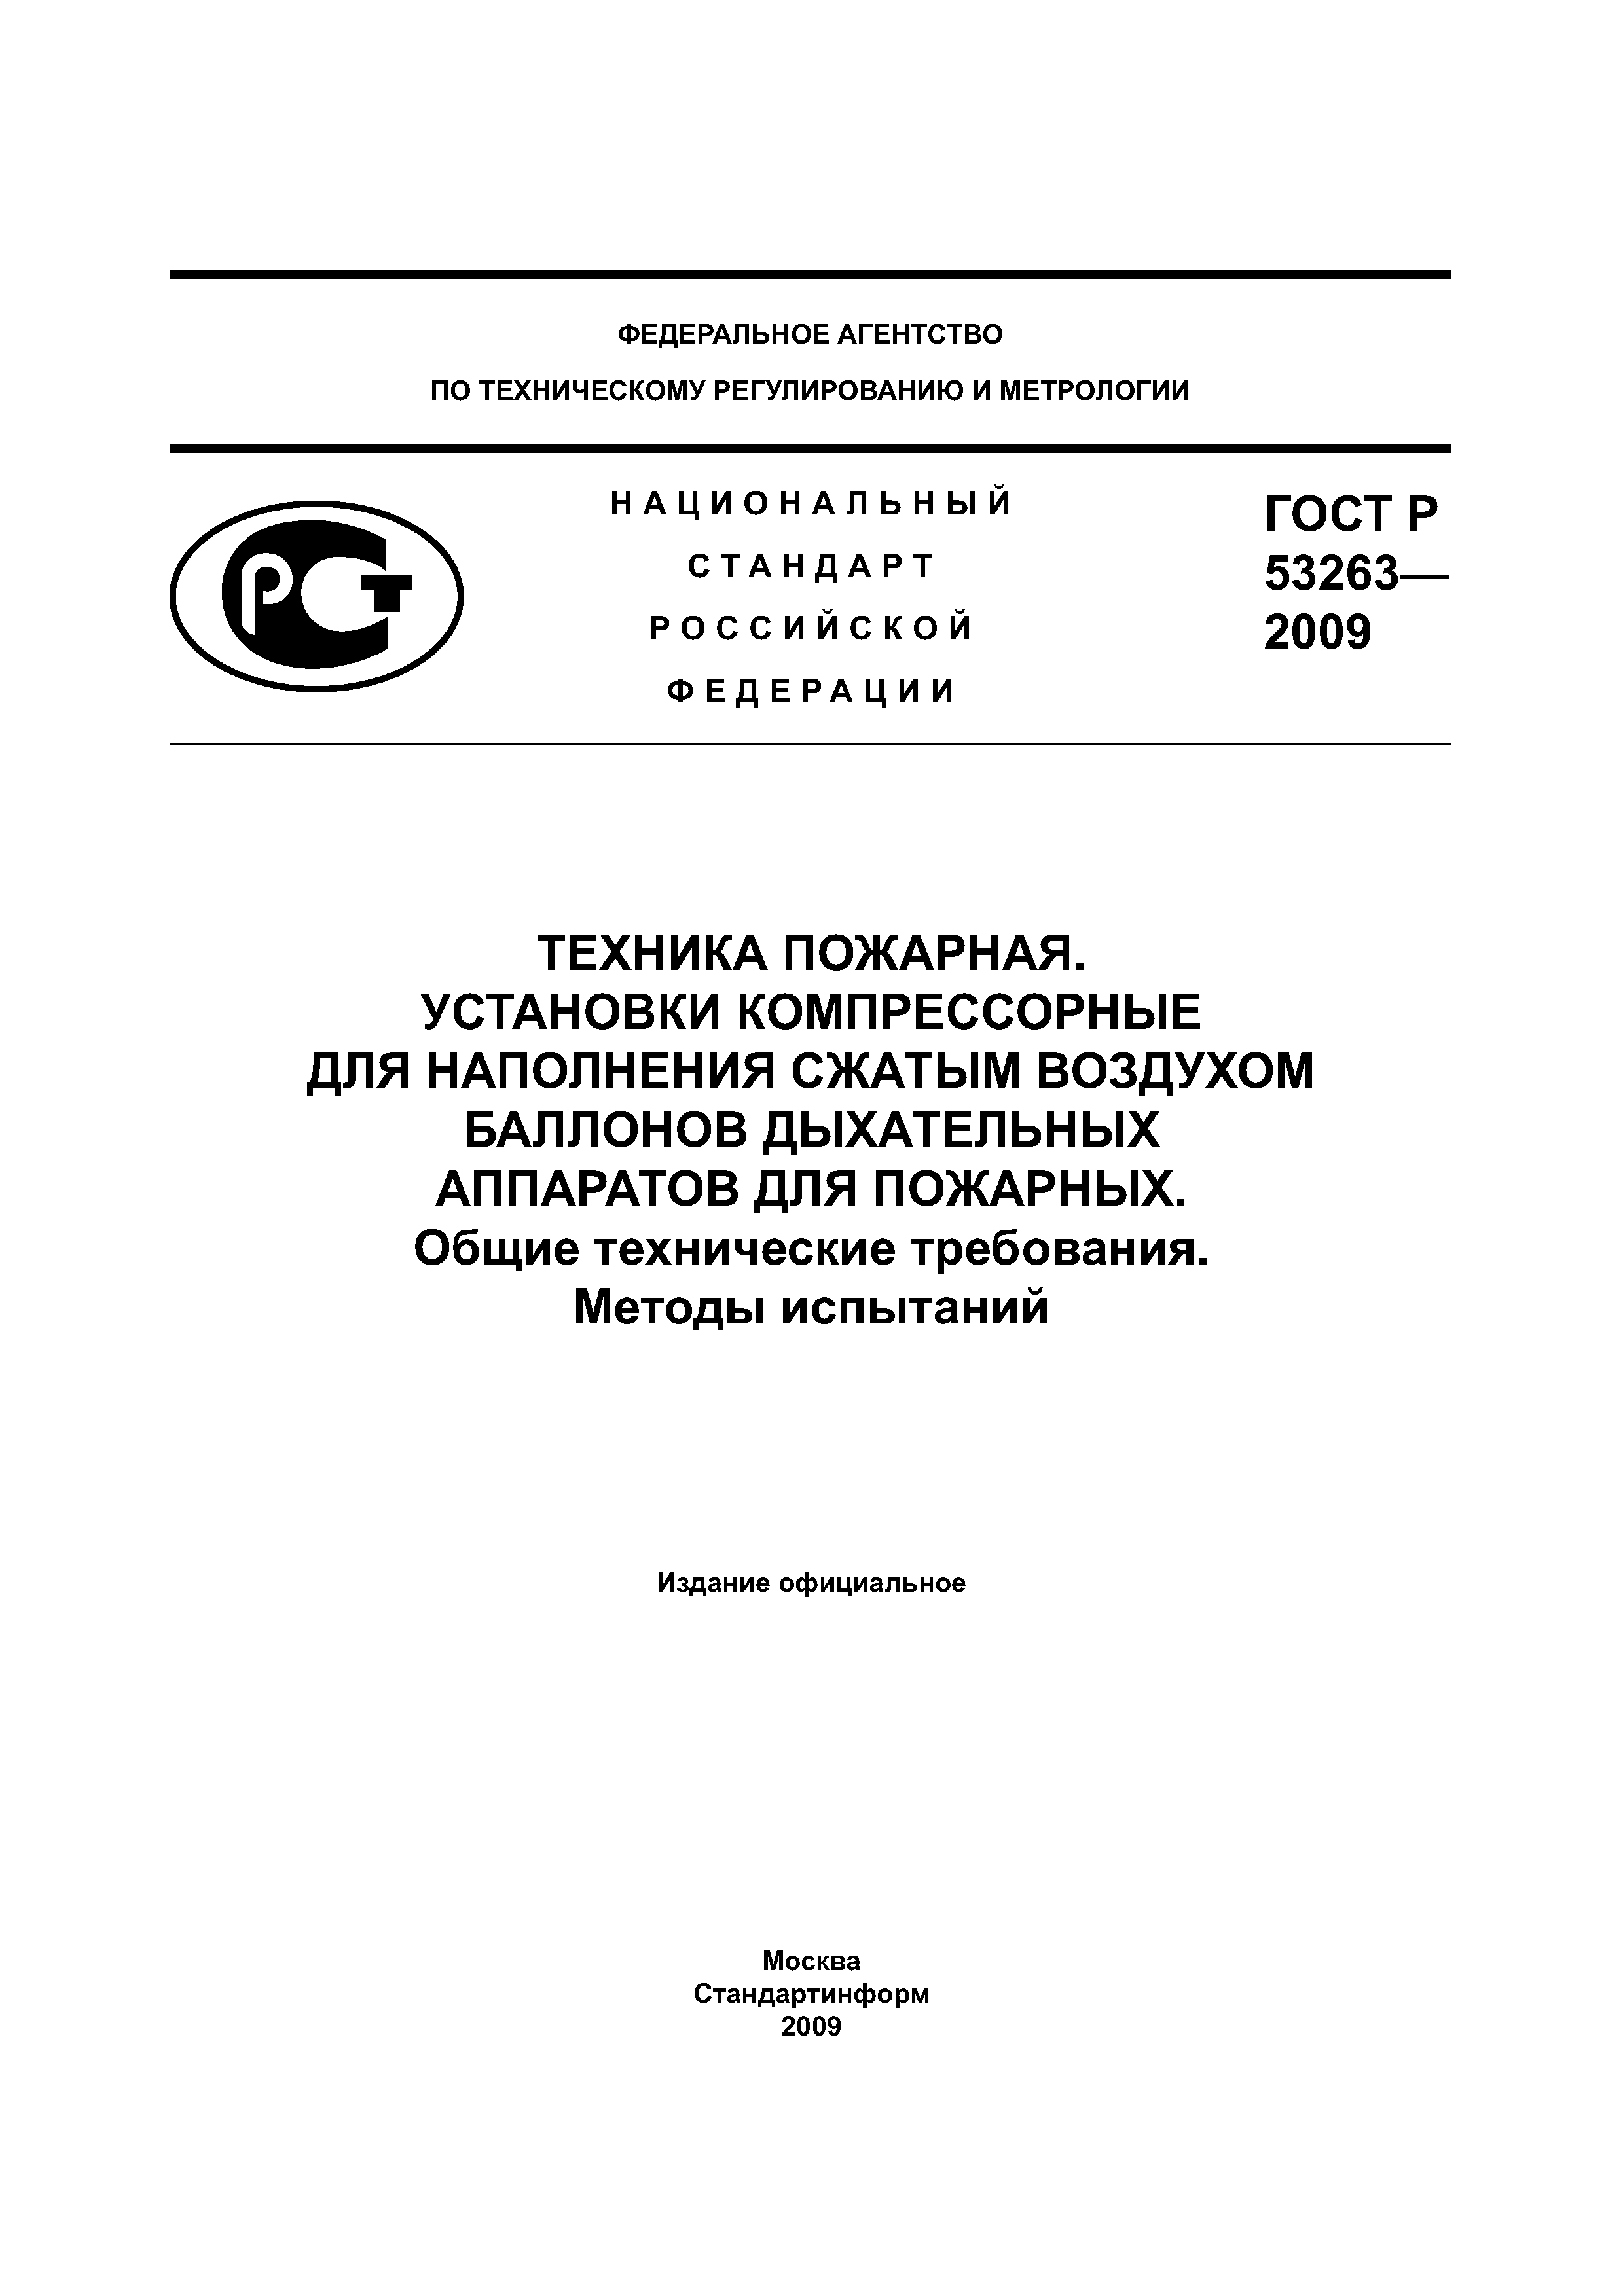 ГОСТ Р 53263-2009